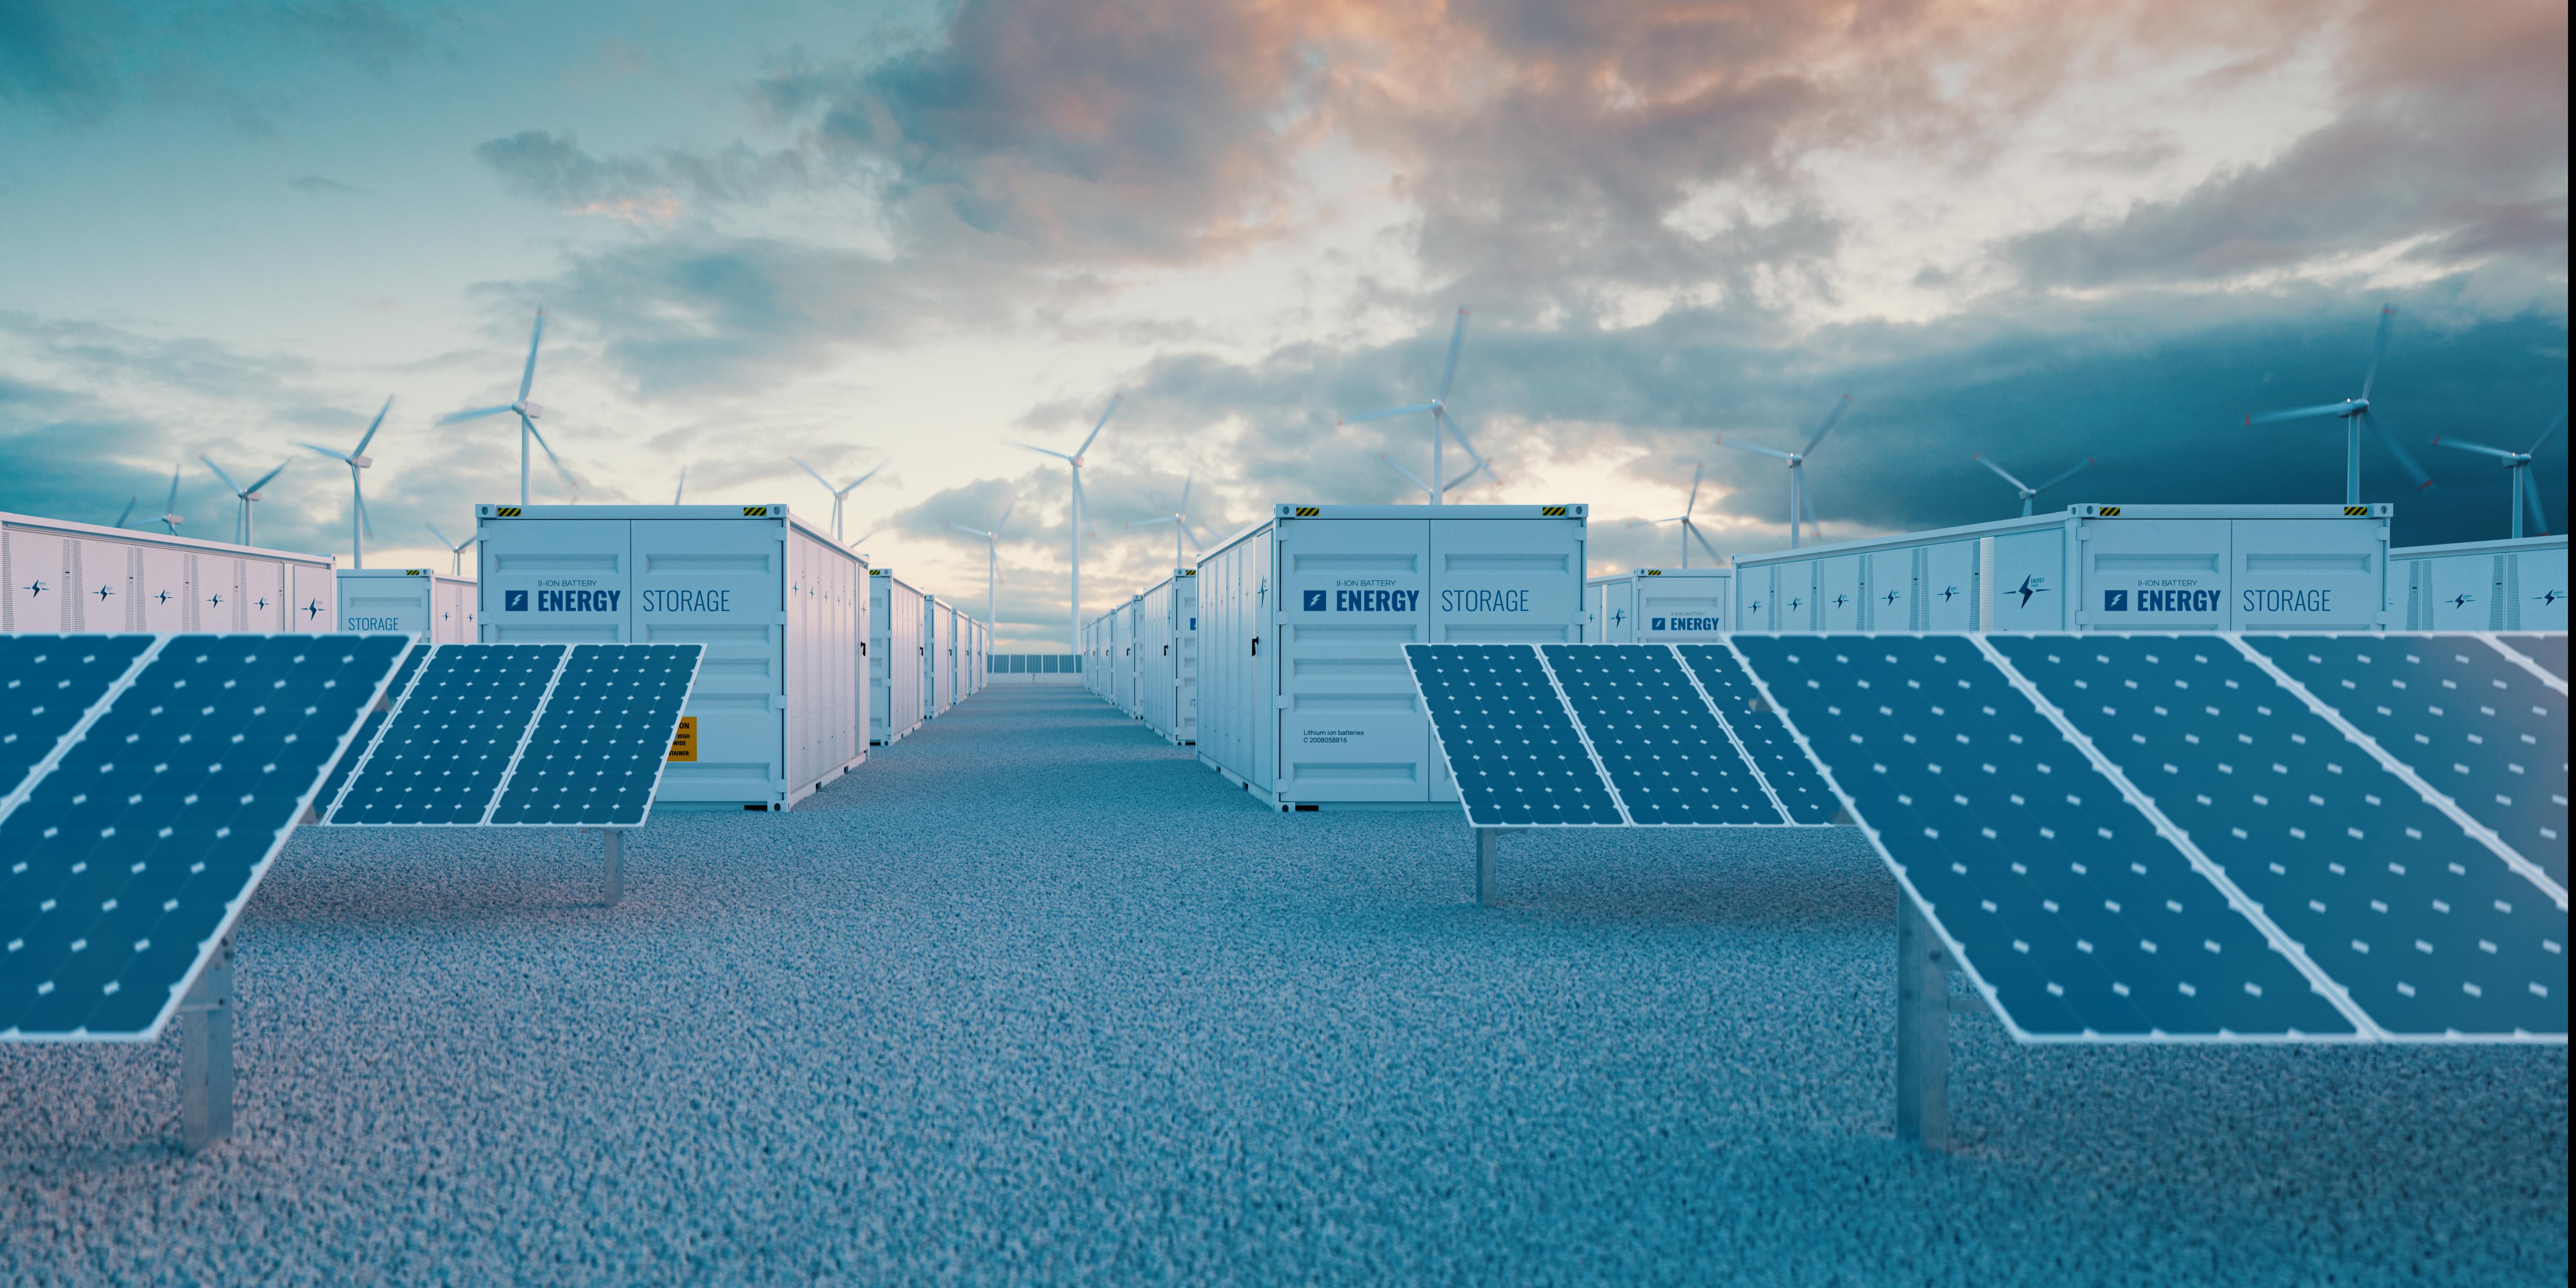 Solar panels with solar storage units behind them, set against a sunrise sky